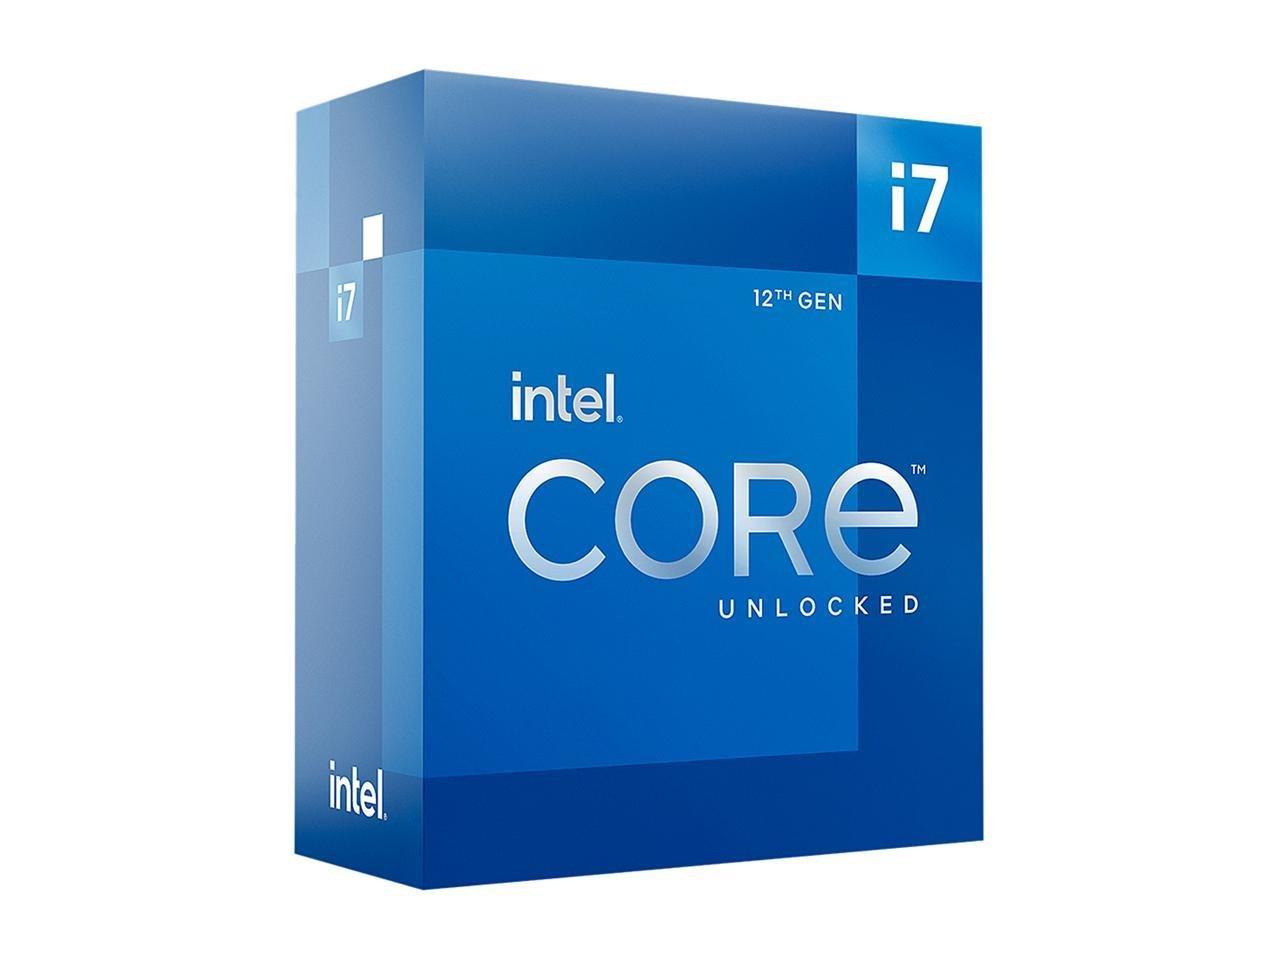 Intel Core i7-12700K CPU 12 (8P+4E) Cores up to 5.0 GHz Unlocked LGA1700 (Intel 600 Series) 125W